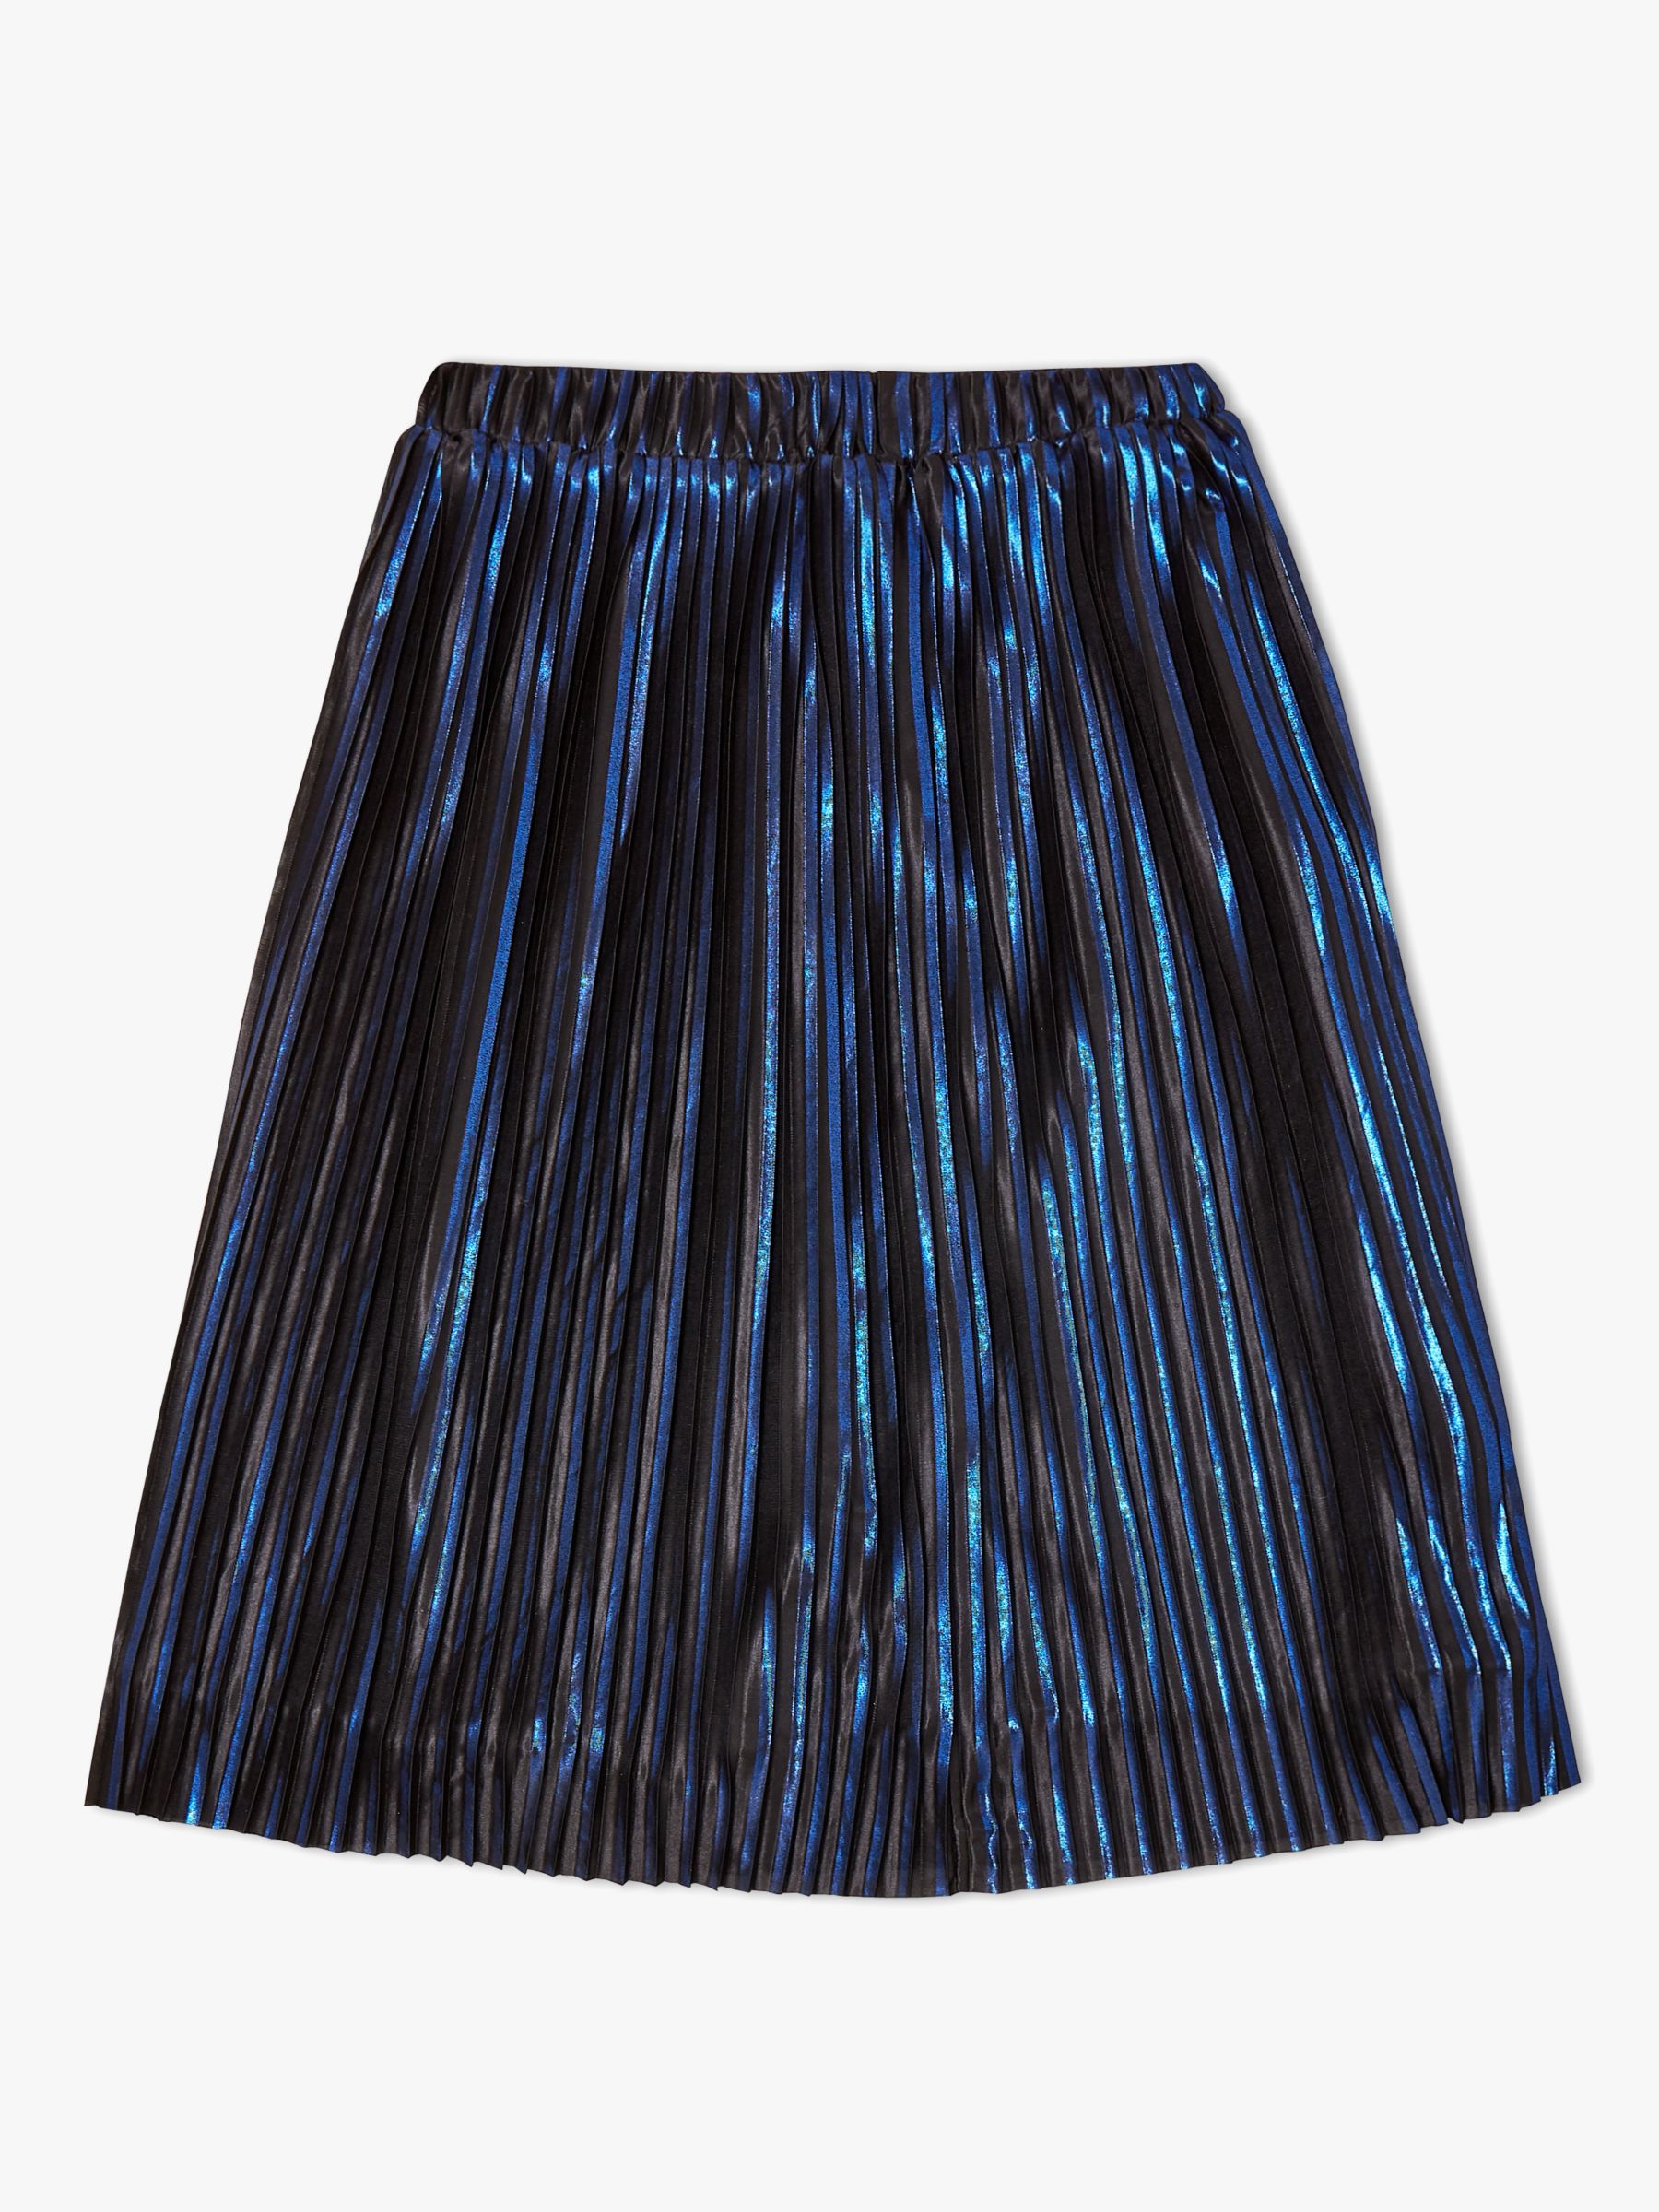 John Lewis & Partners Girls' Metallic Pleated Skirt, Blue